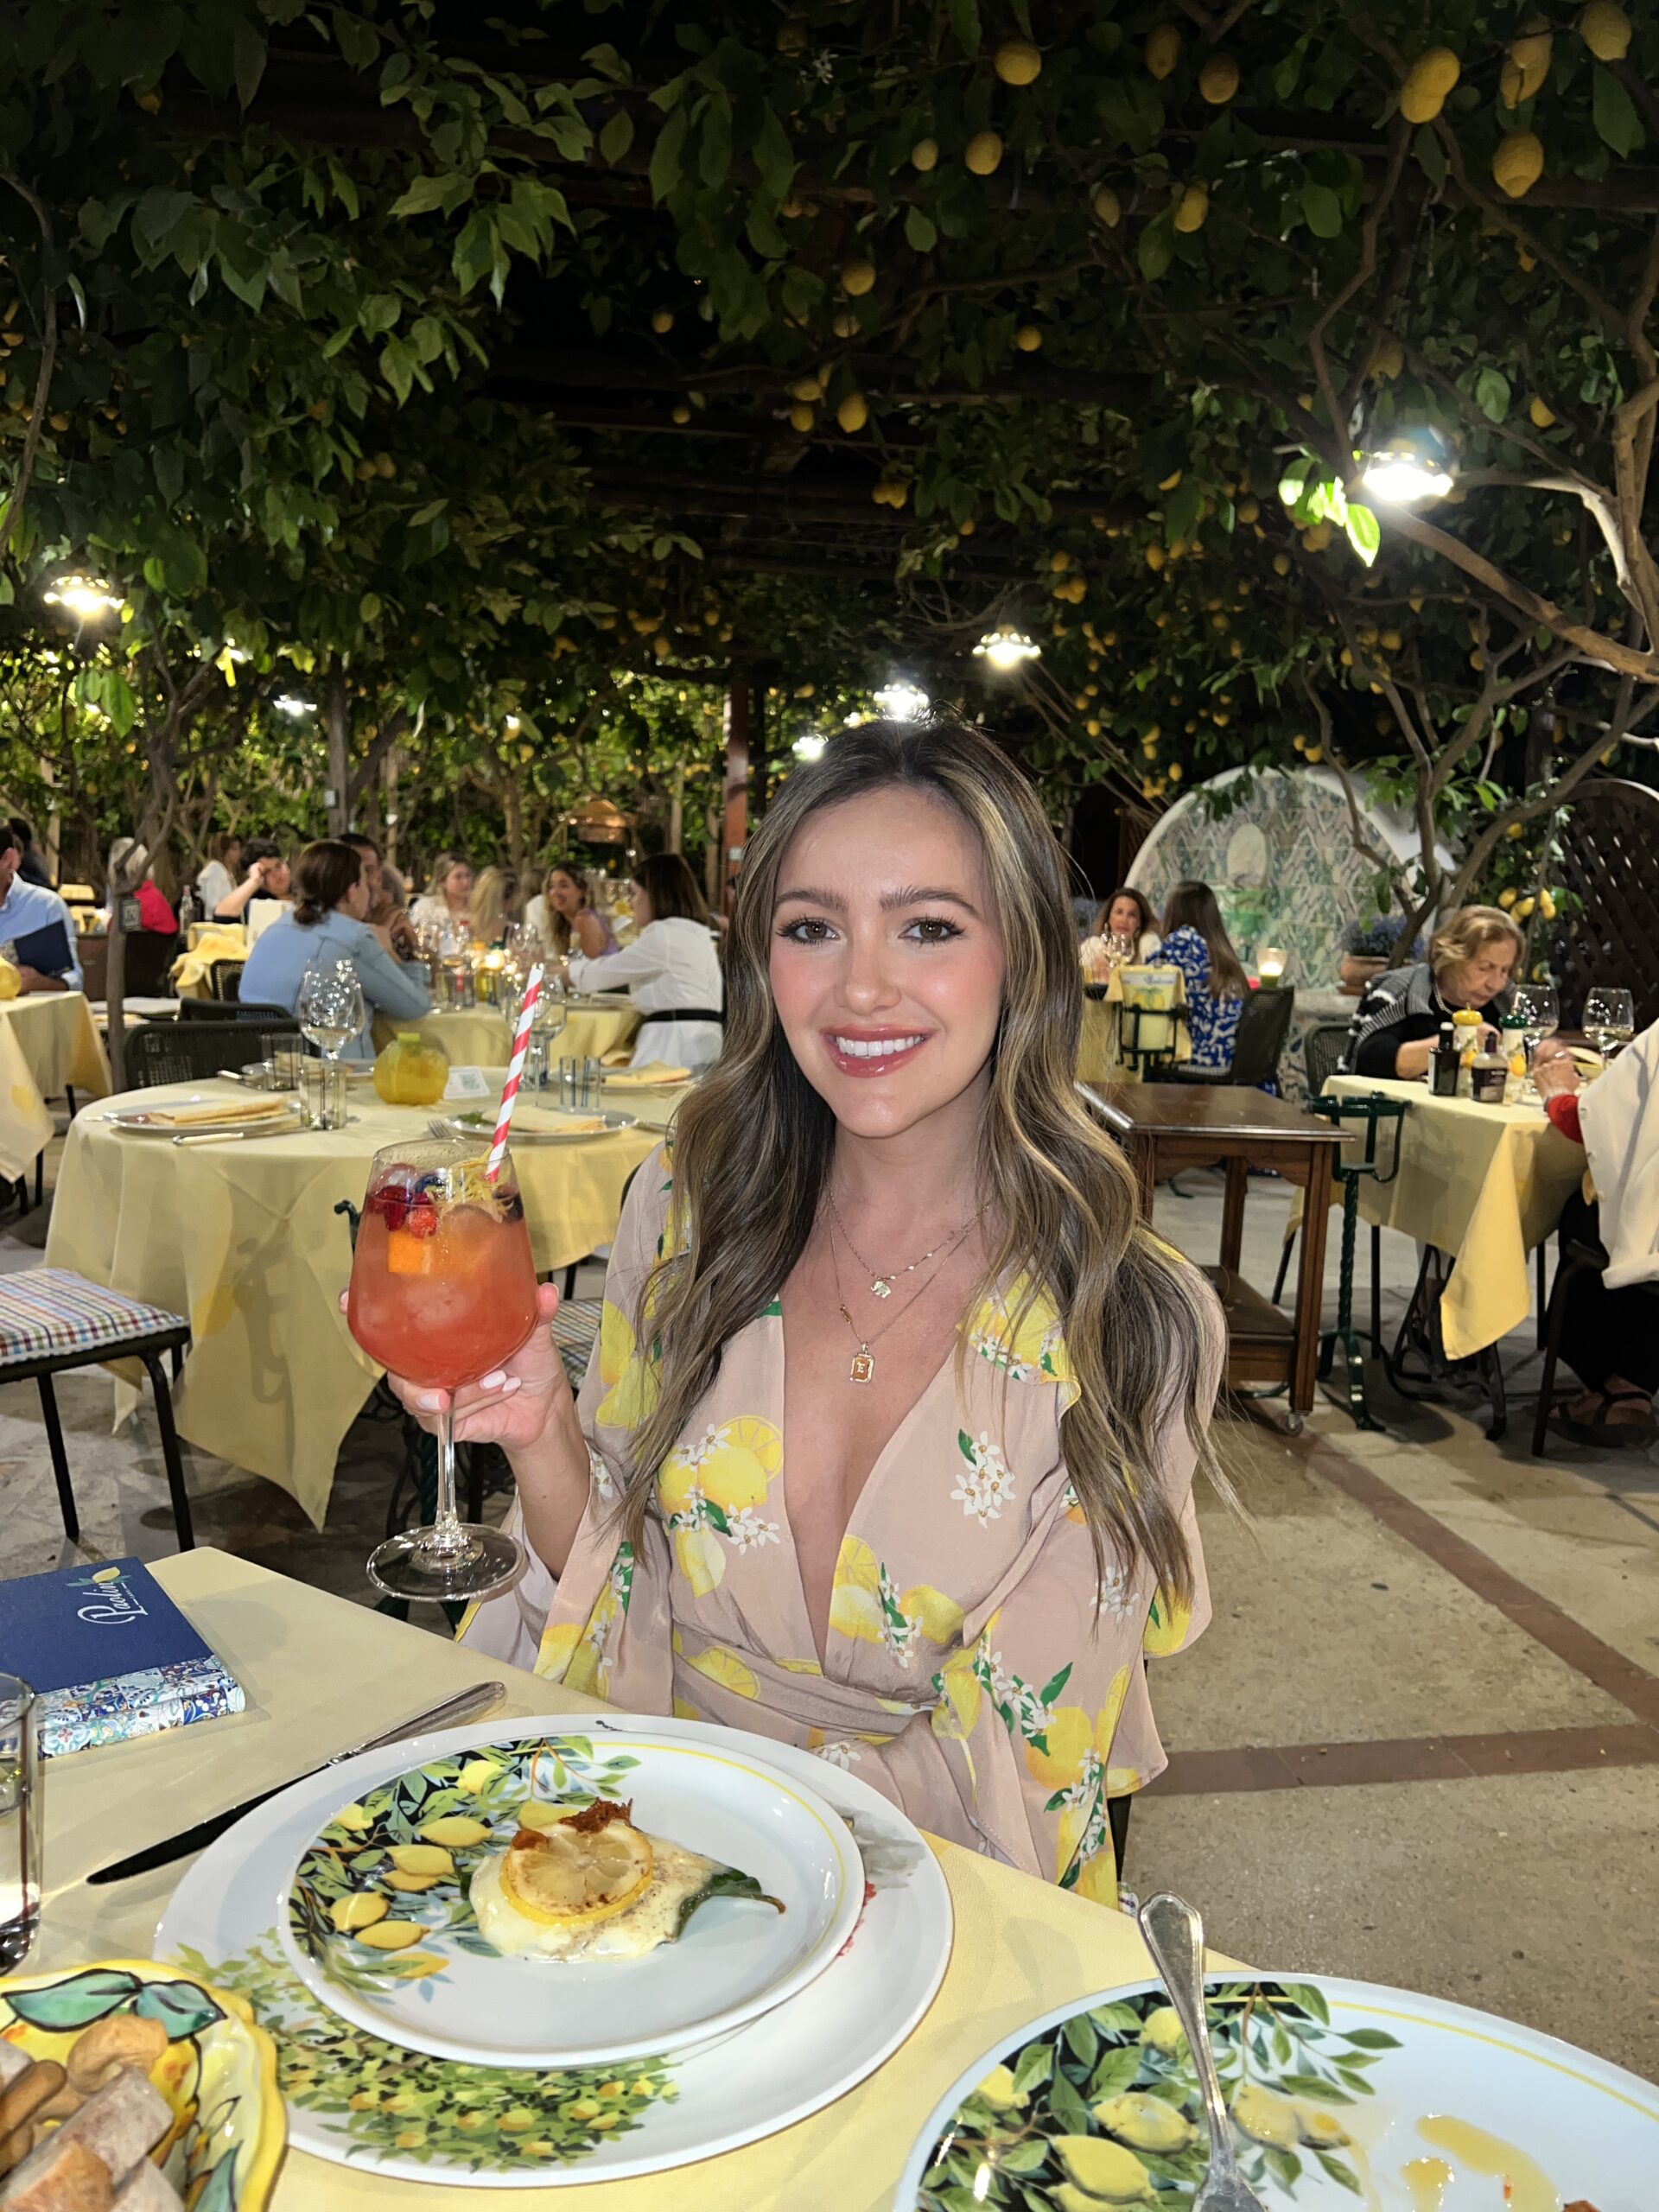 Capri italy travel guide for best restaurant at Da Paolino lemon trees in amalfi coast island